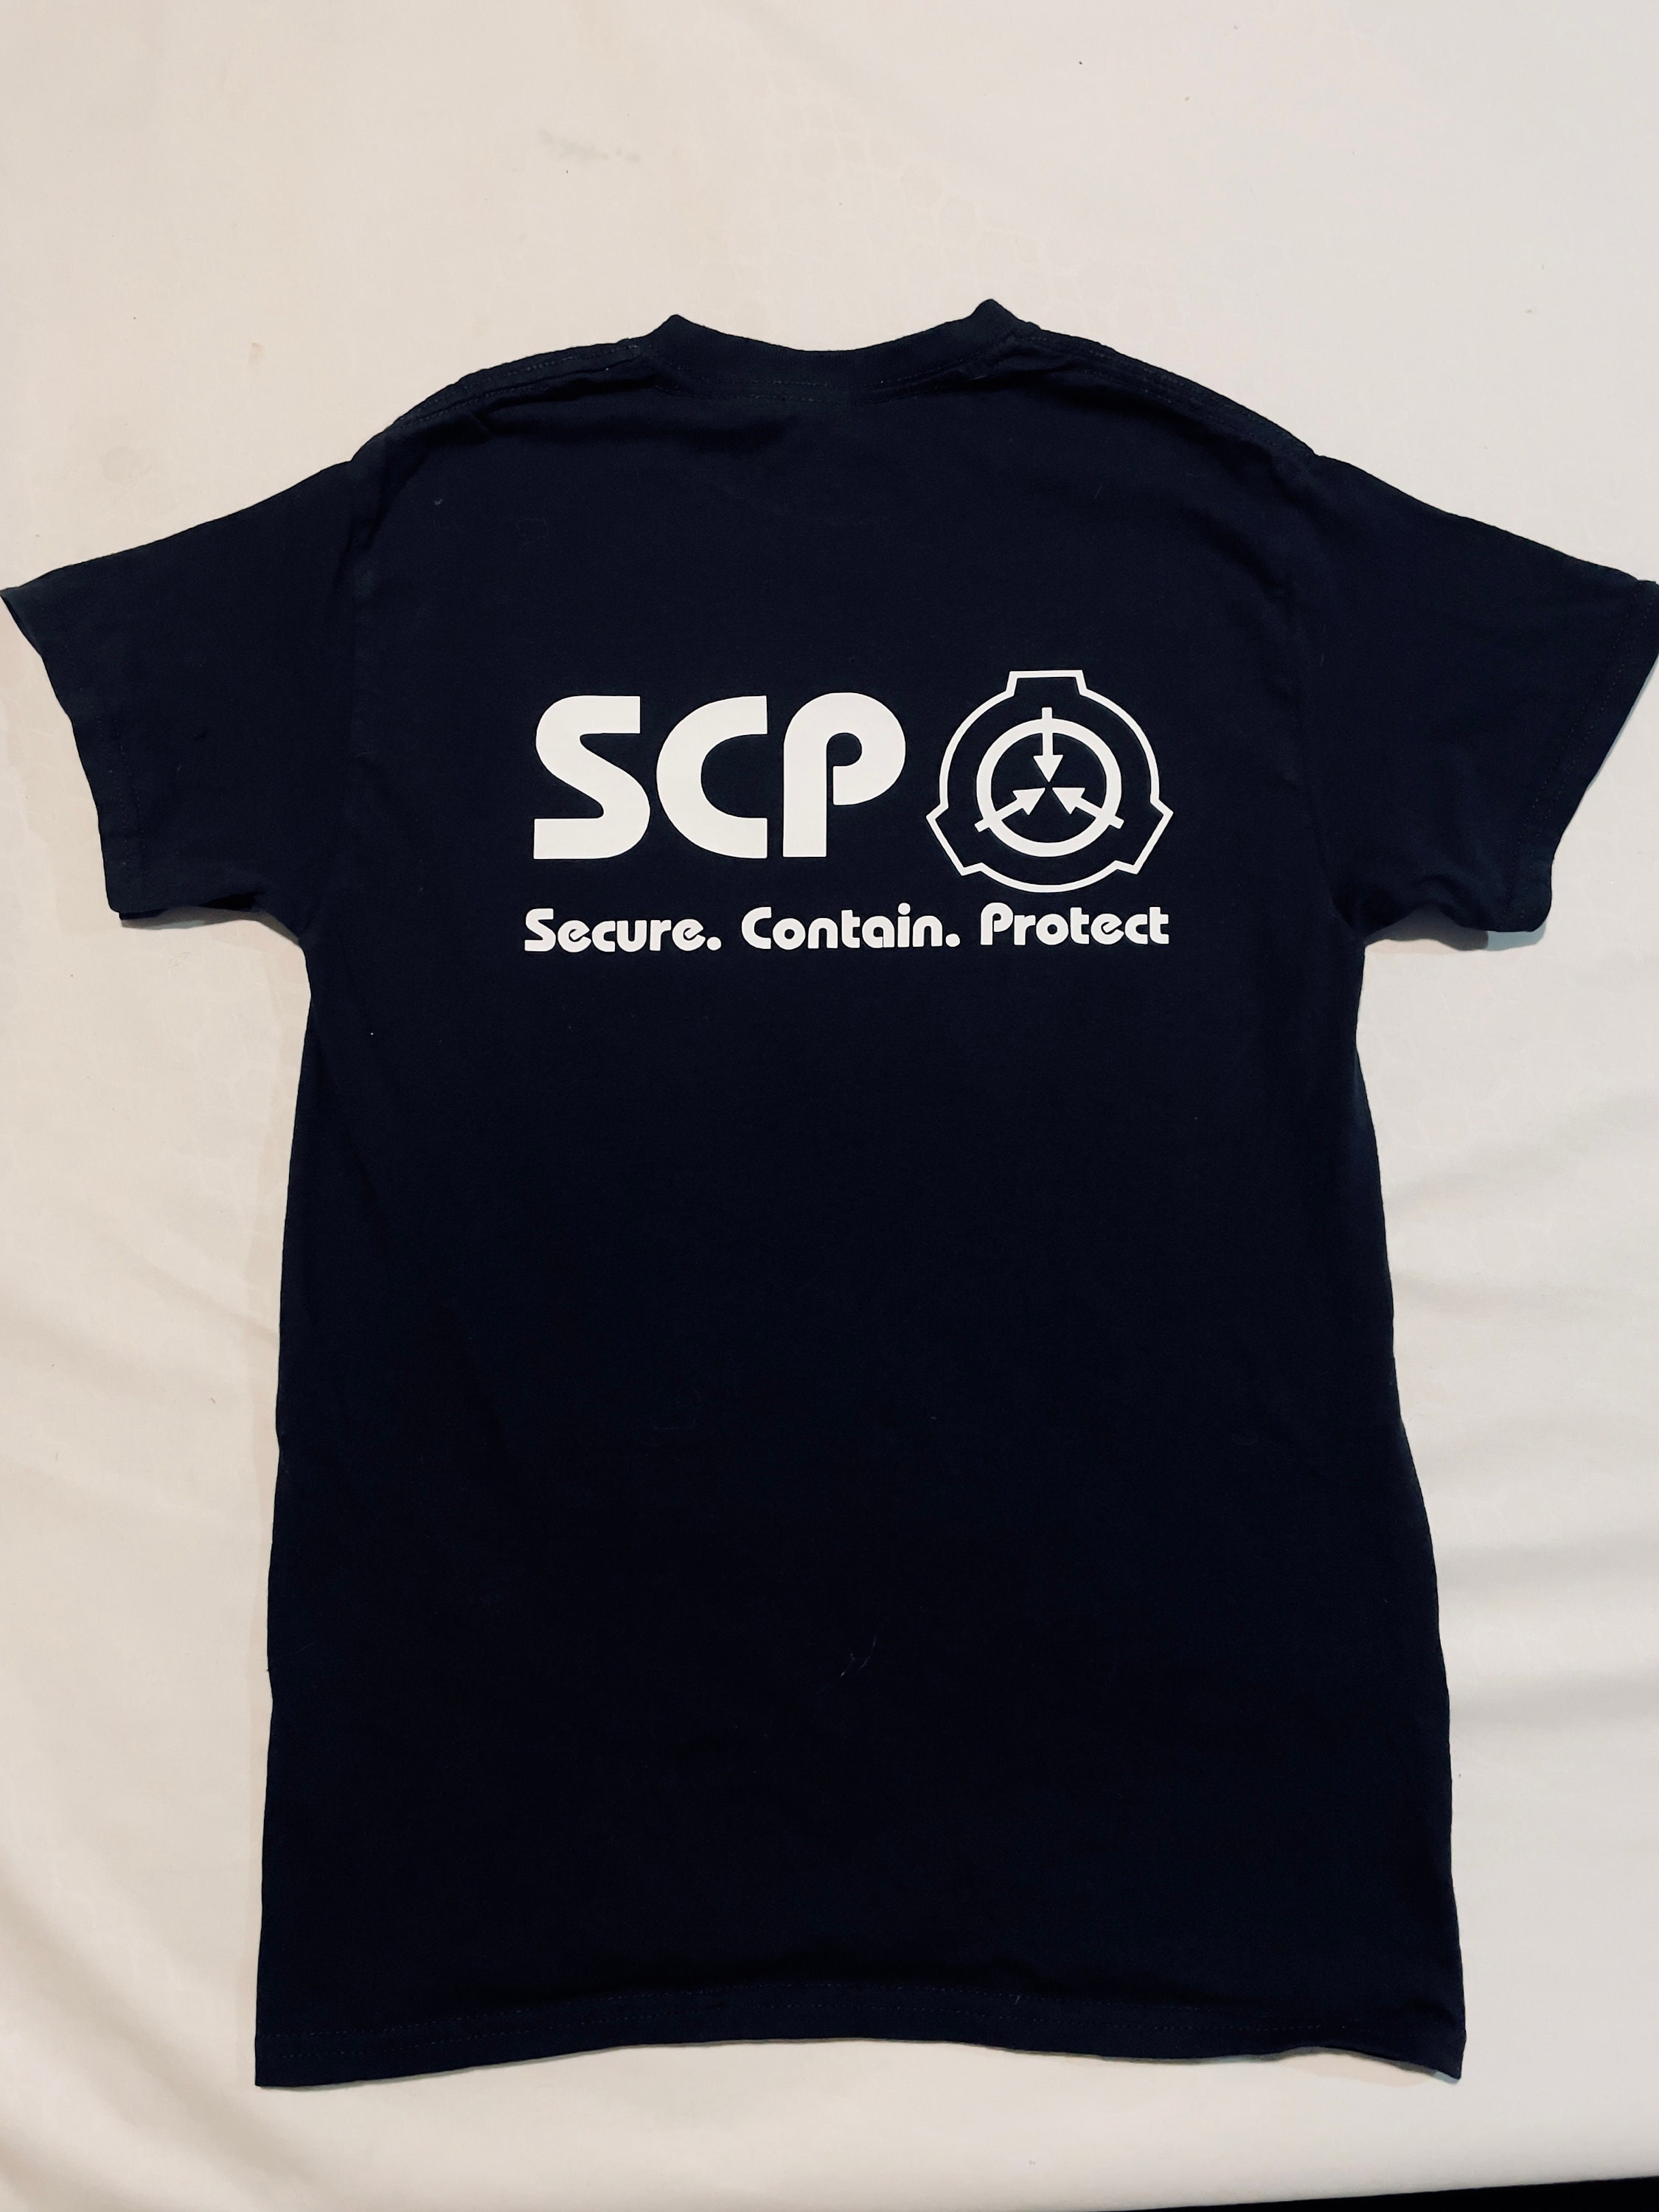 SCP-253 the Leukemia Plagues / Cosplay / SCP / Creepy Pasta / 